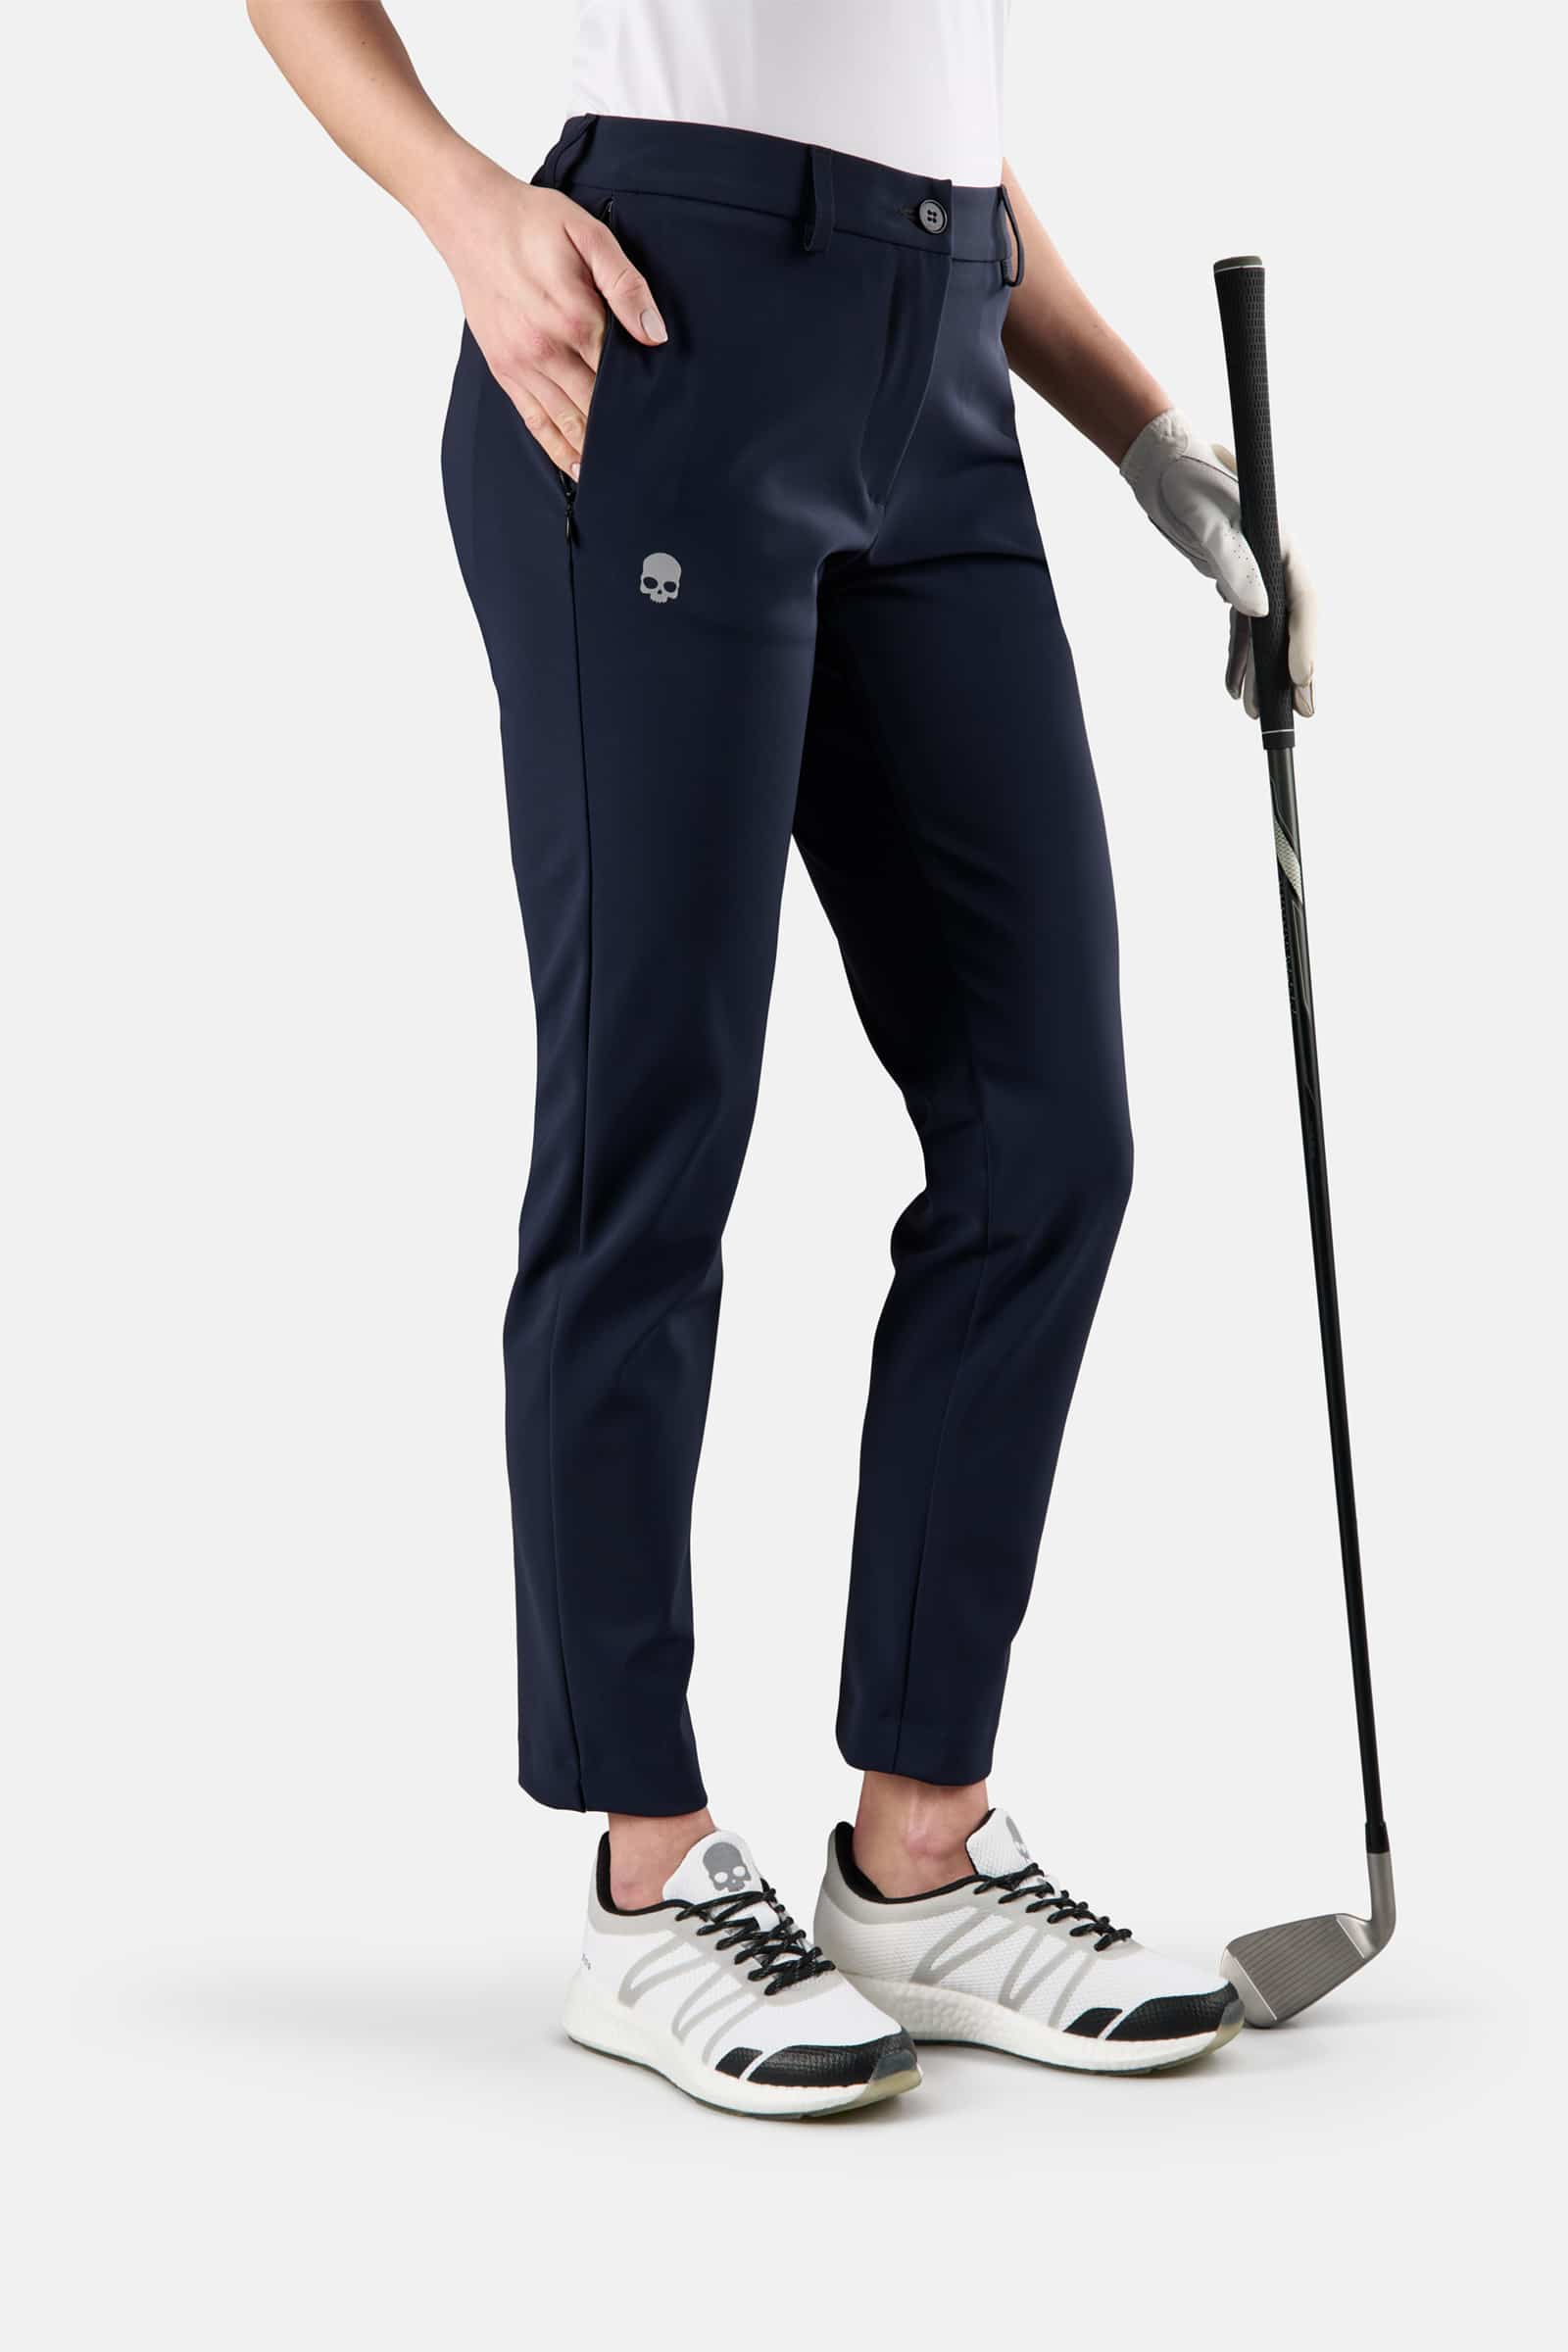 Pantaloni invernali da golf - BLUE NAVY - Abbigliamento sportivo | Hydrogen